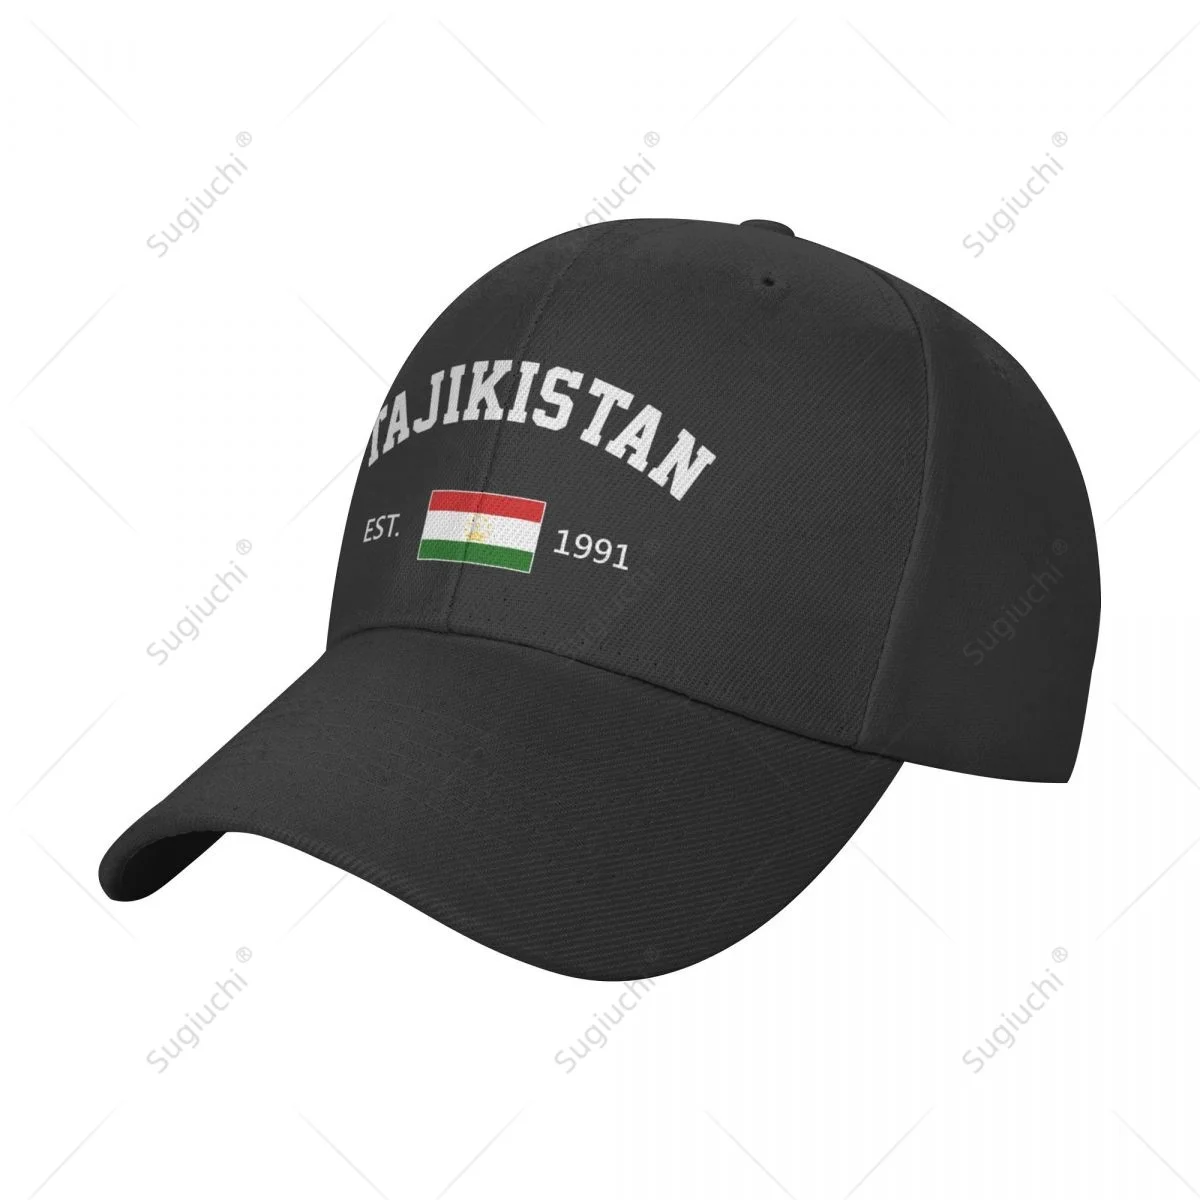 

Unisex Baseball Cap Tajikistan EST.1991 Independence Day Wild Sun Shade Peaked Adjustable Outdoor Caps for Men Women